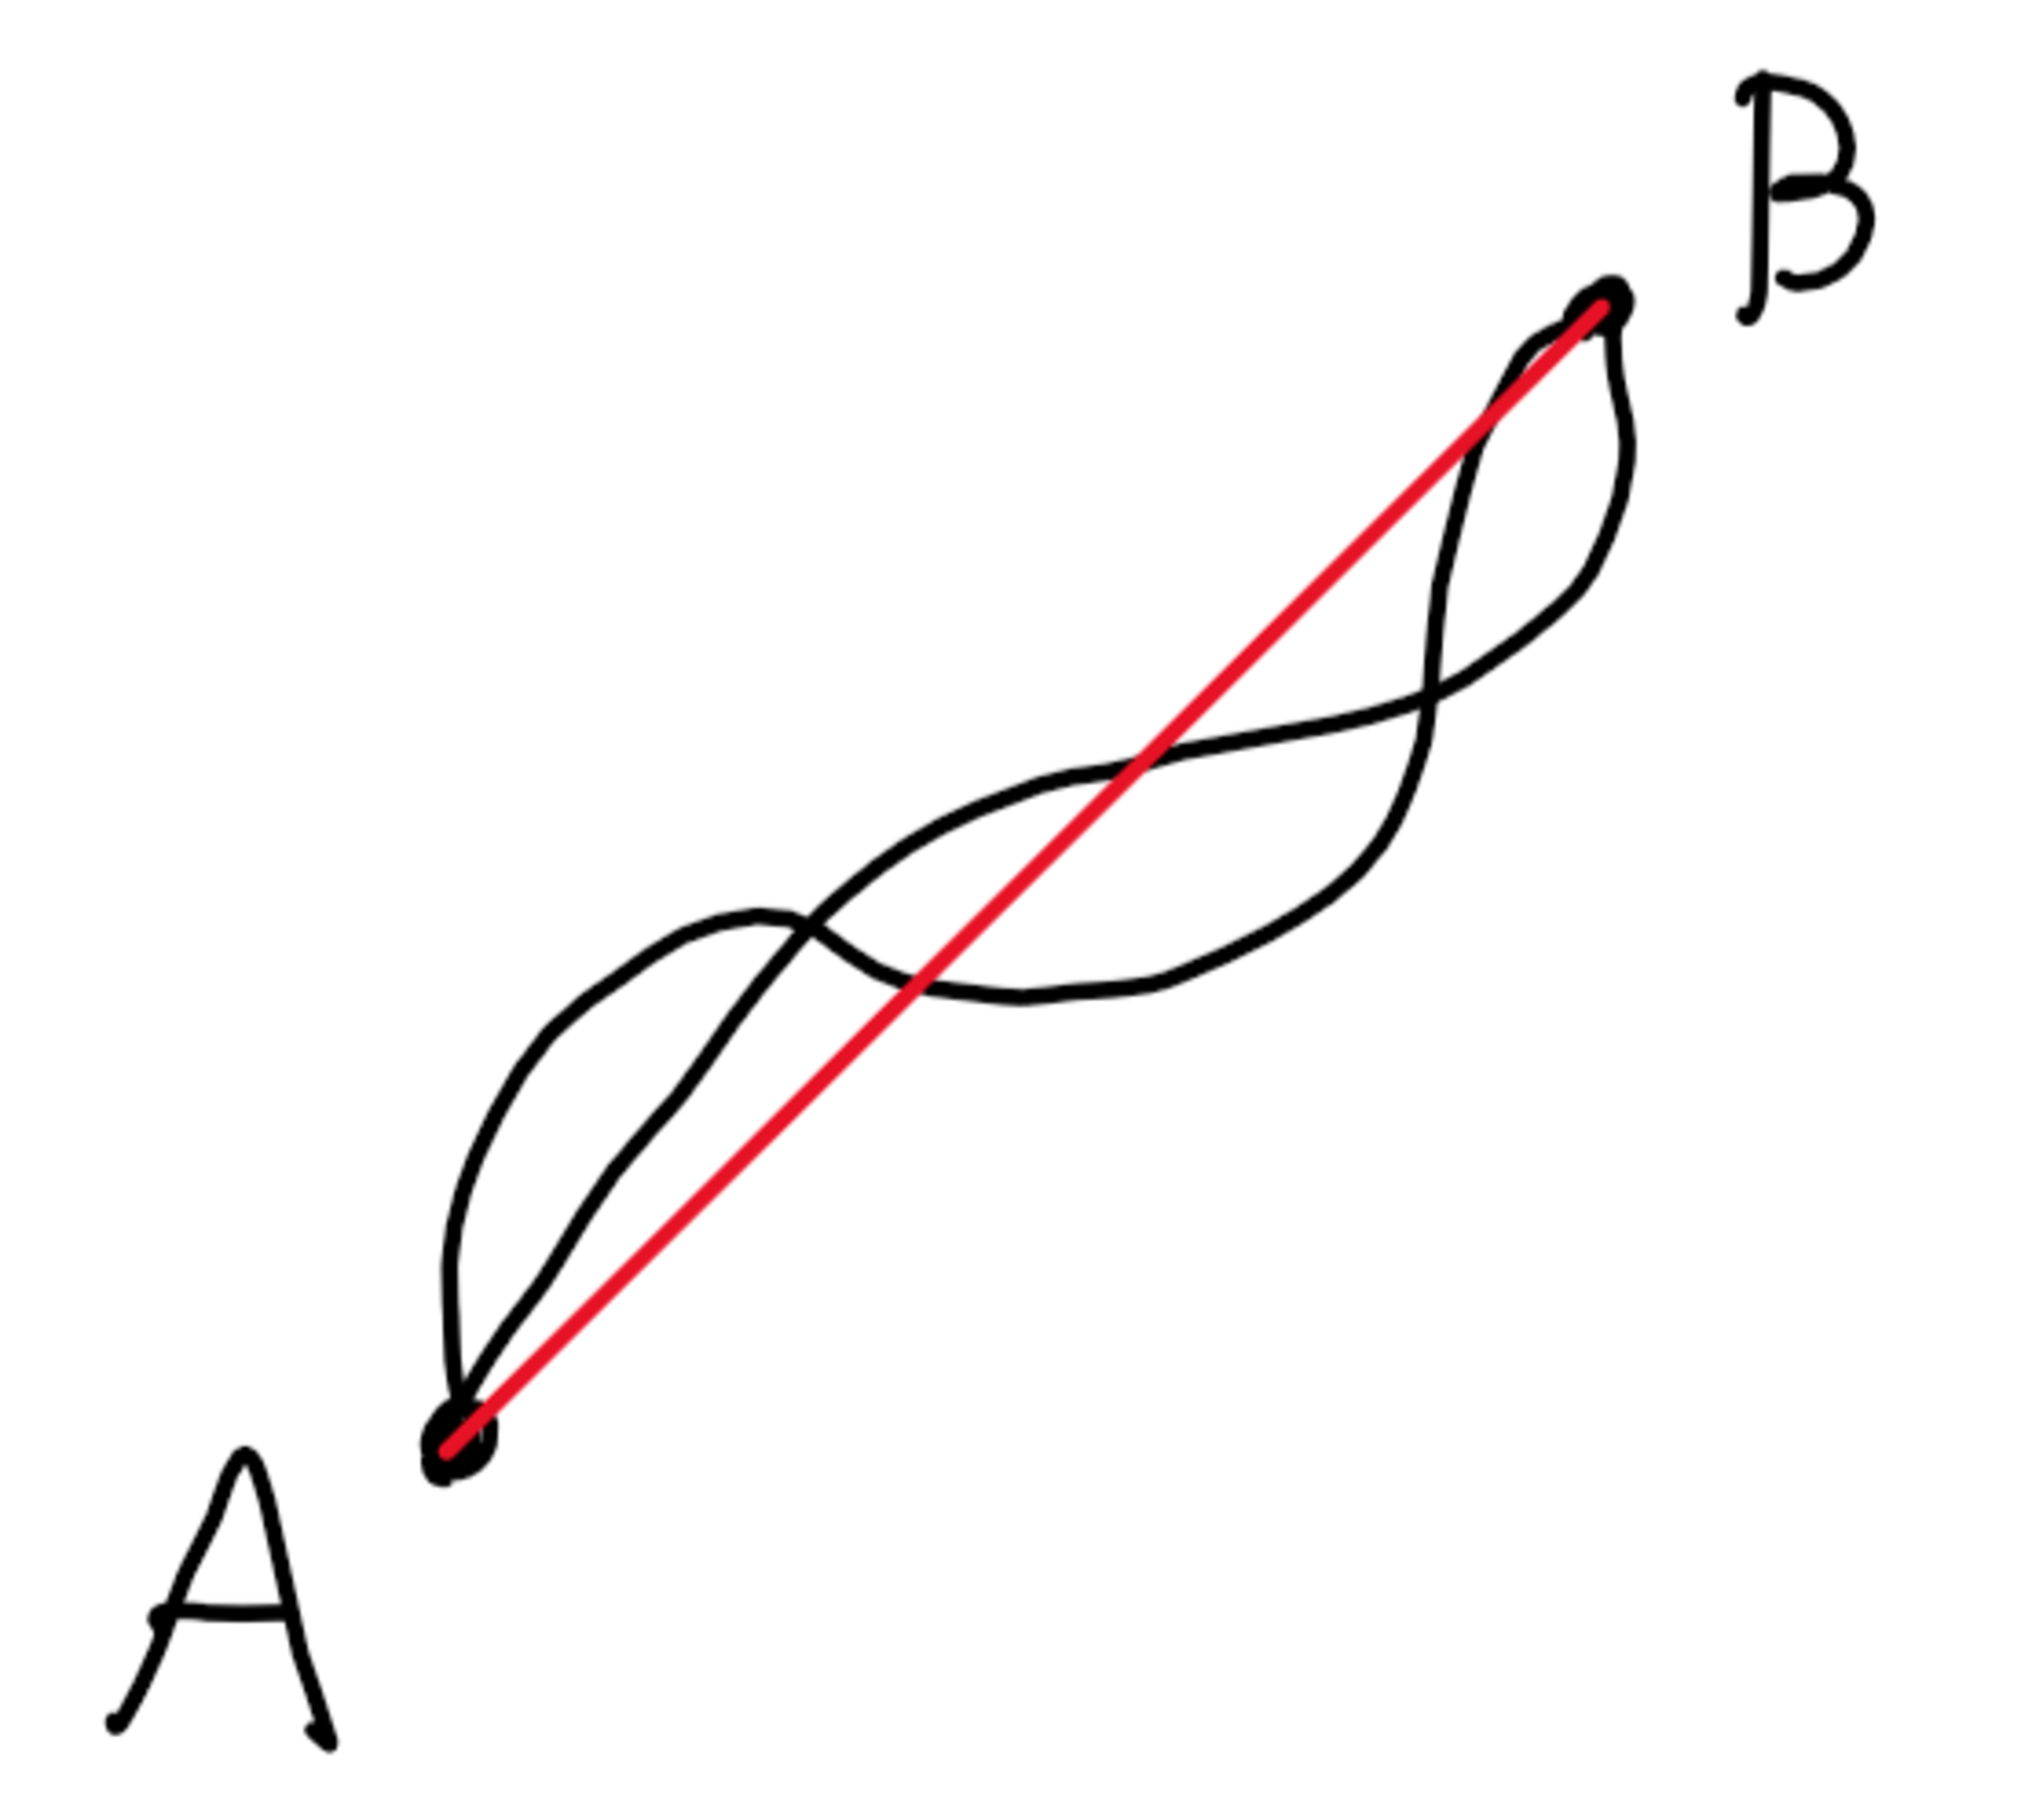 AとBを結ぶ曲線